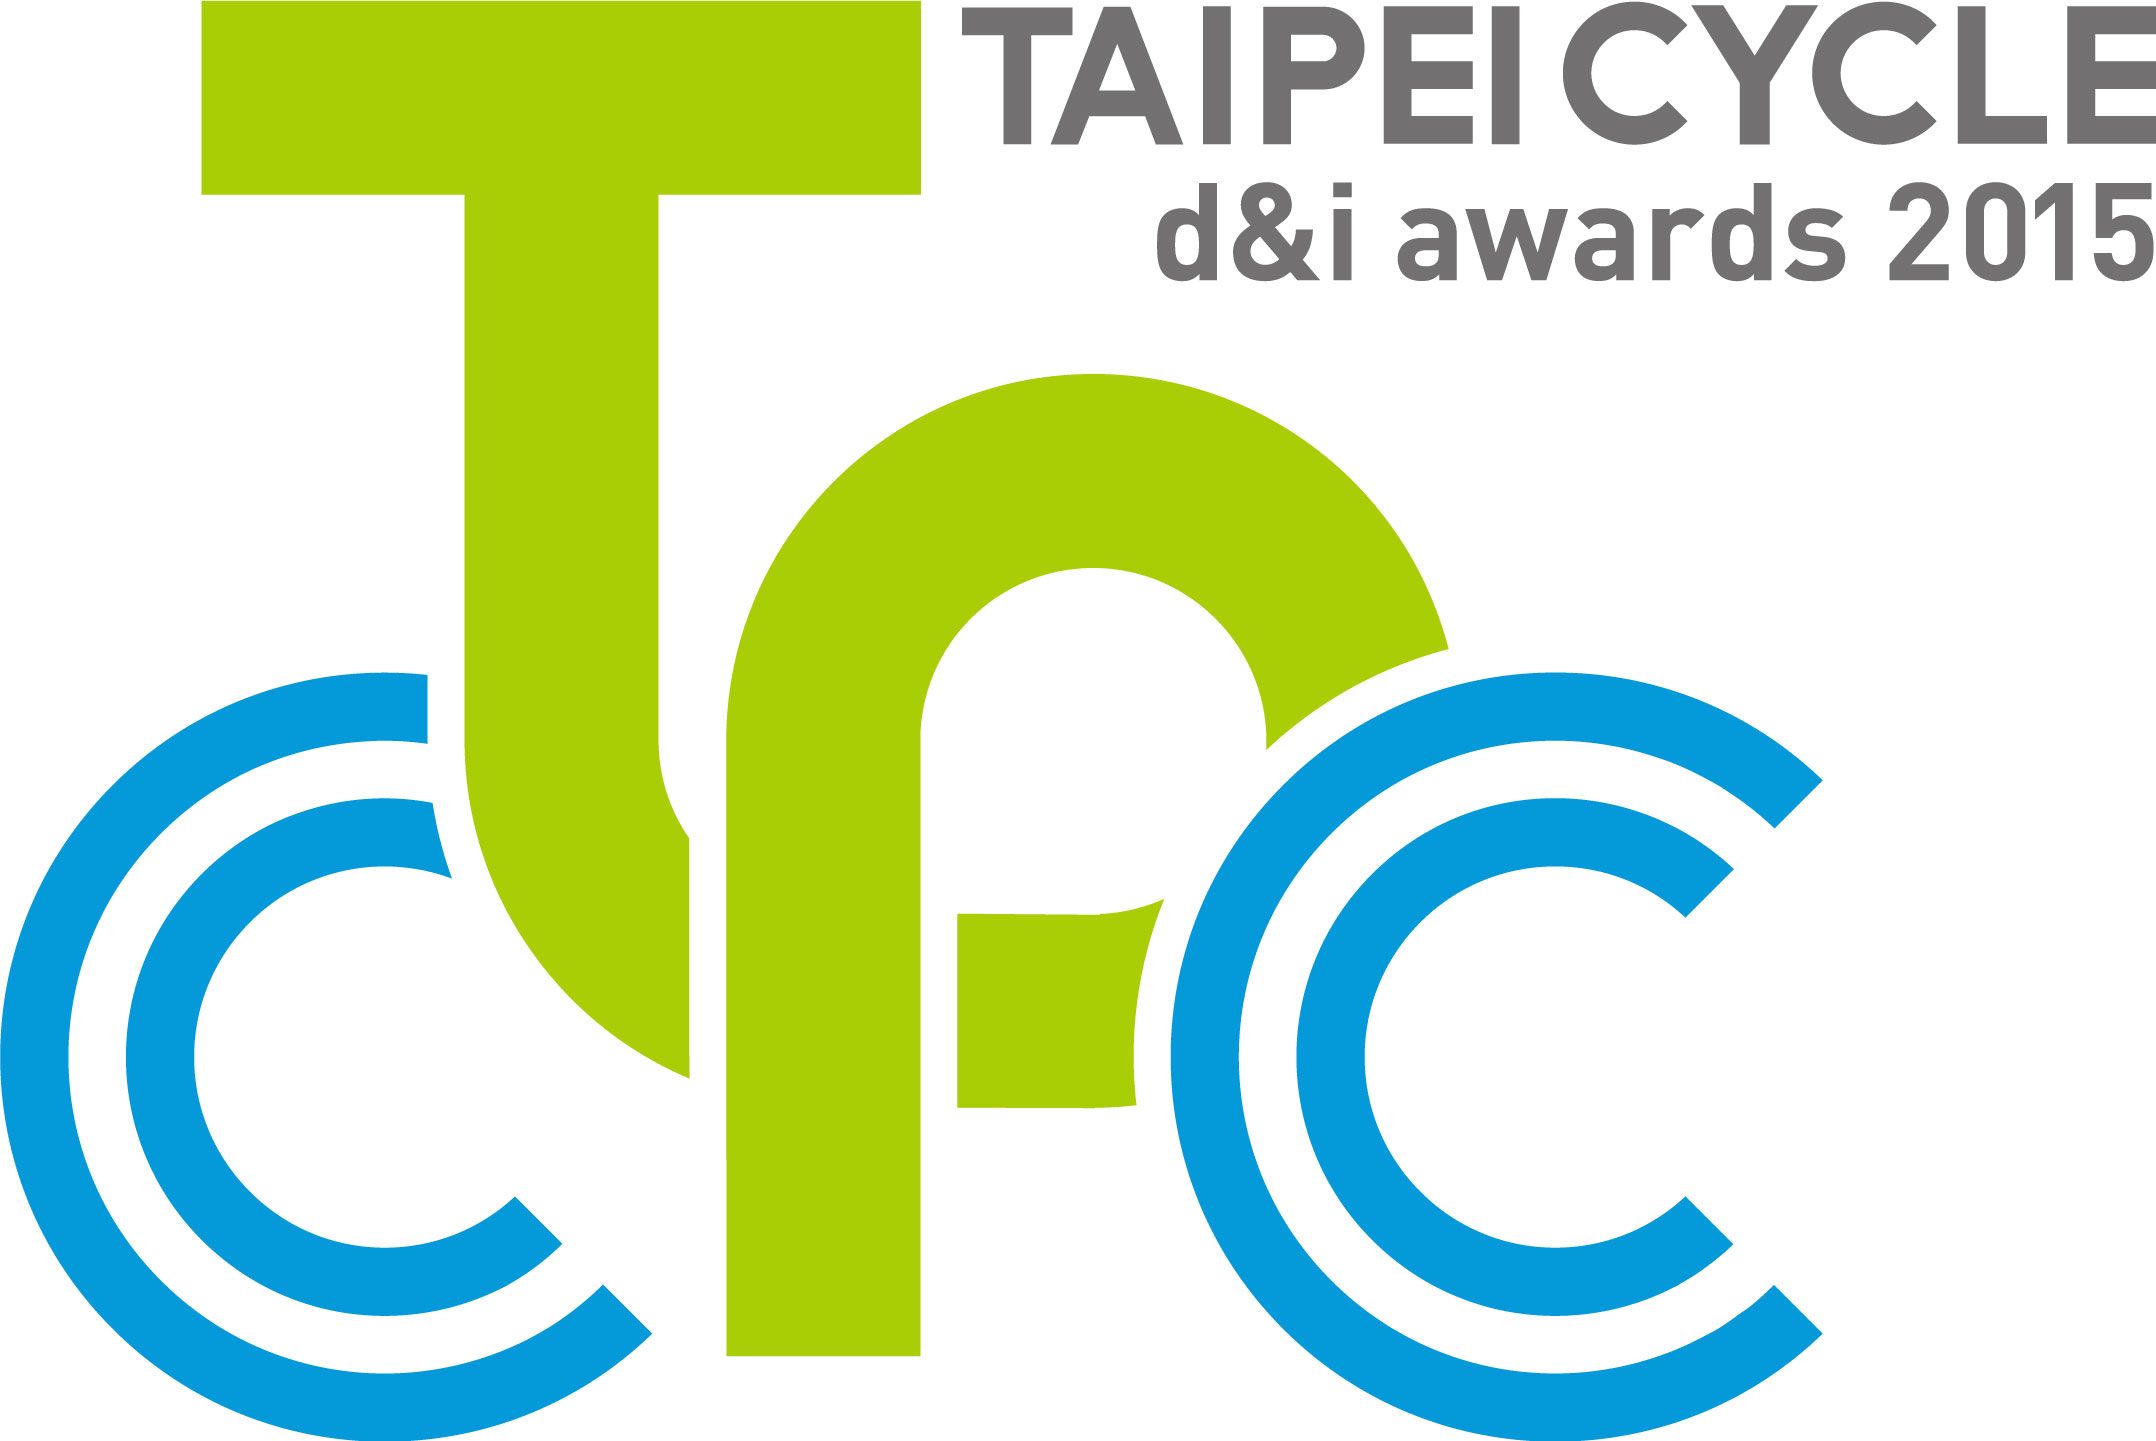 2015 TAIPEI CYCLE d&i award logo for awarded Thule product